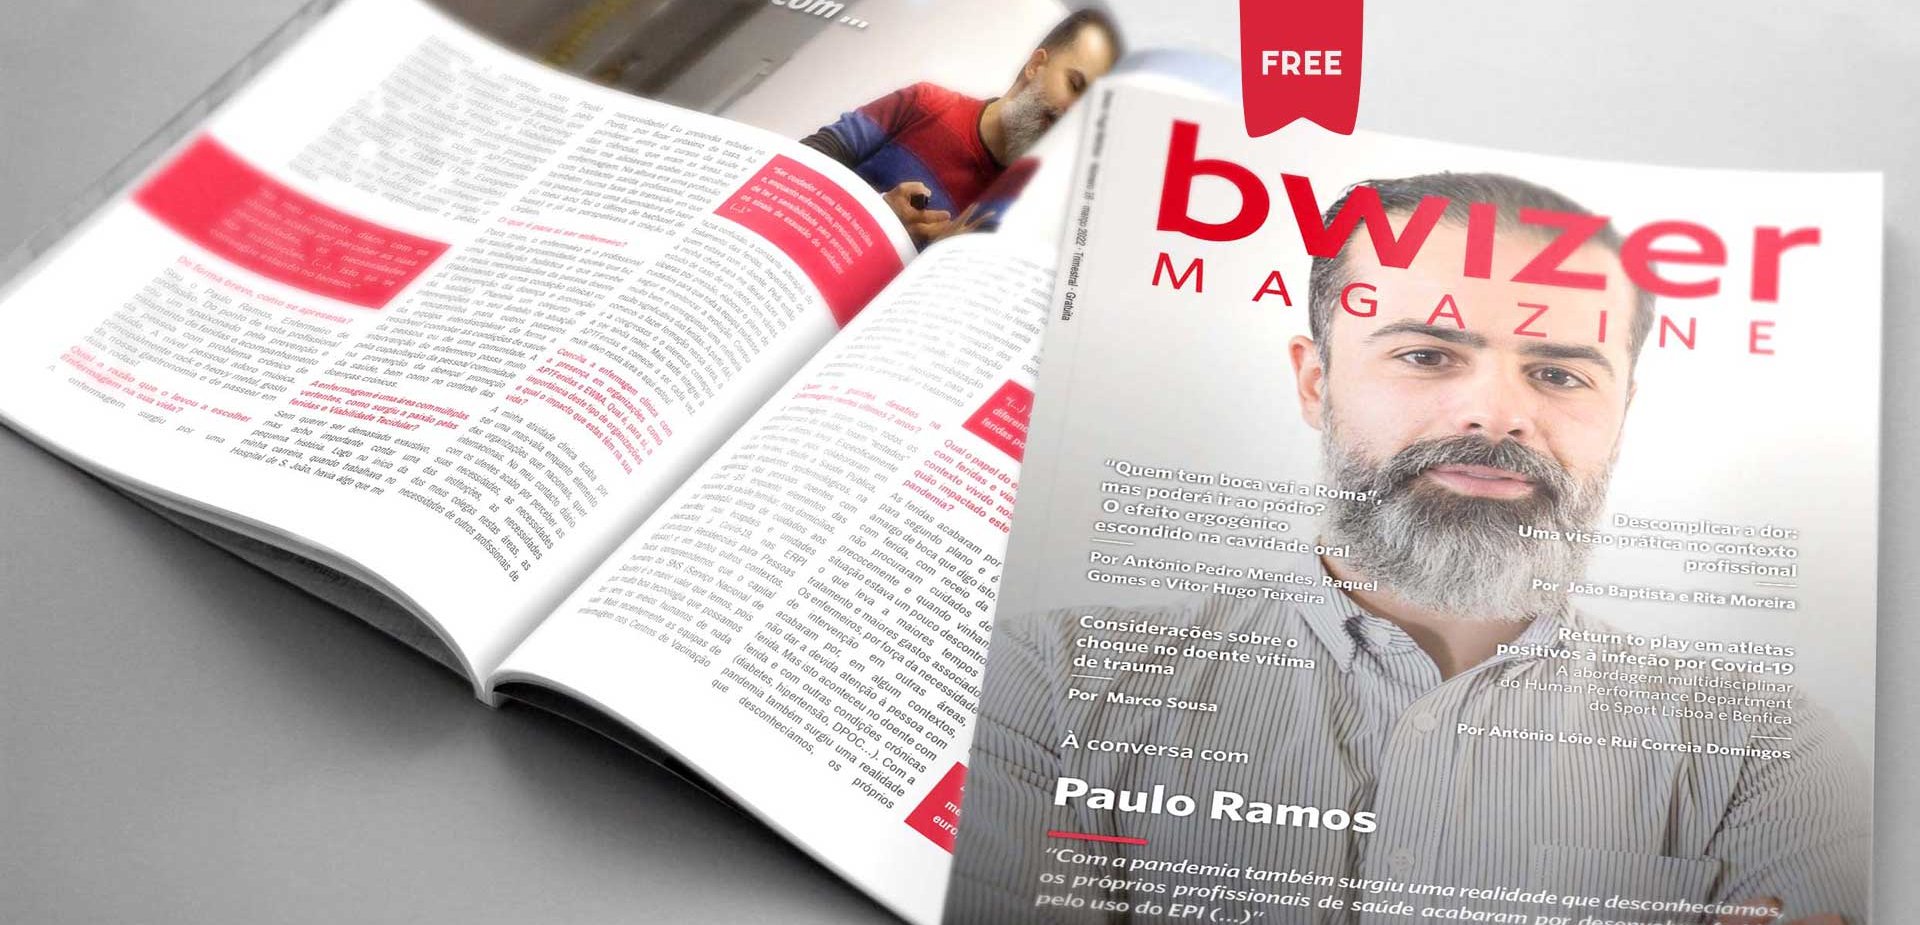 À conversa com Paulo Ramos (Bwizer Magazine)